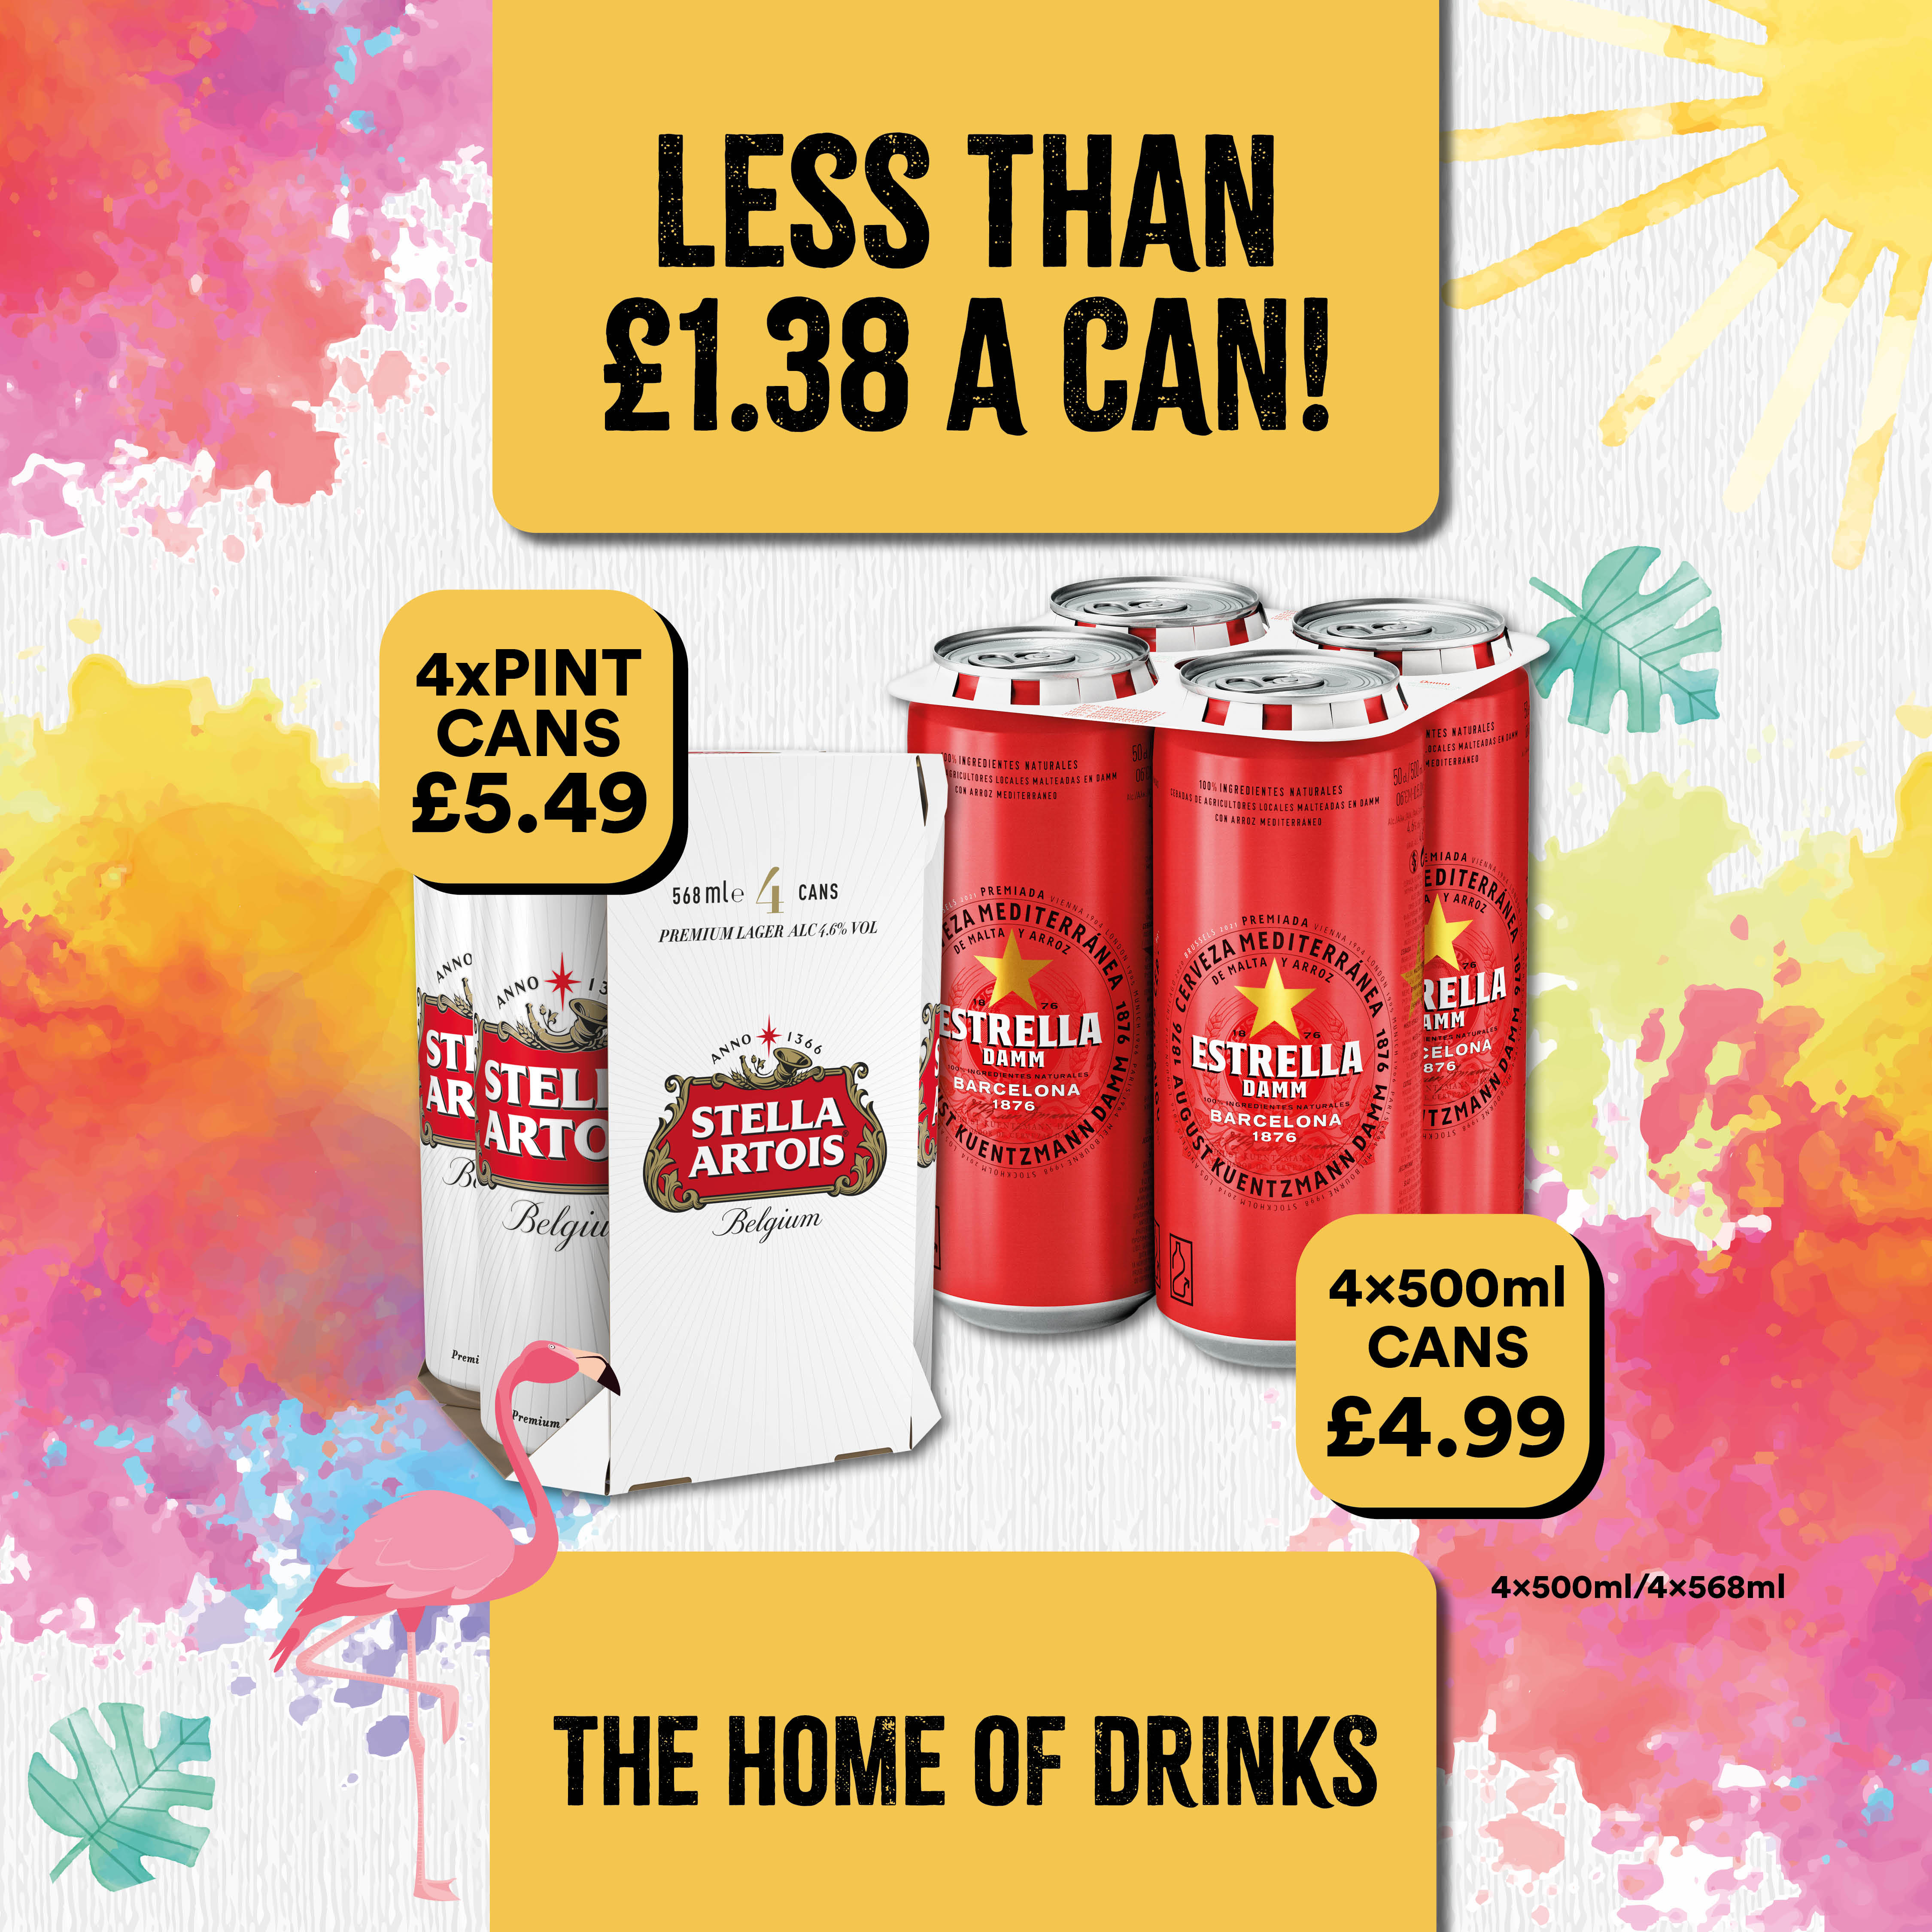 Stella Artois 4 x Pint Cans £5.49 and 4 x 500ml Estrella Cans £4.99 Bargain Booze  in Cost Cutter Nuneaton 02477 984257